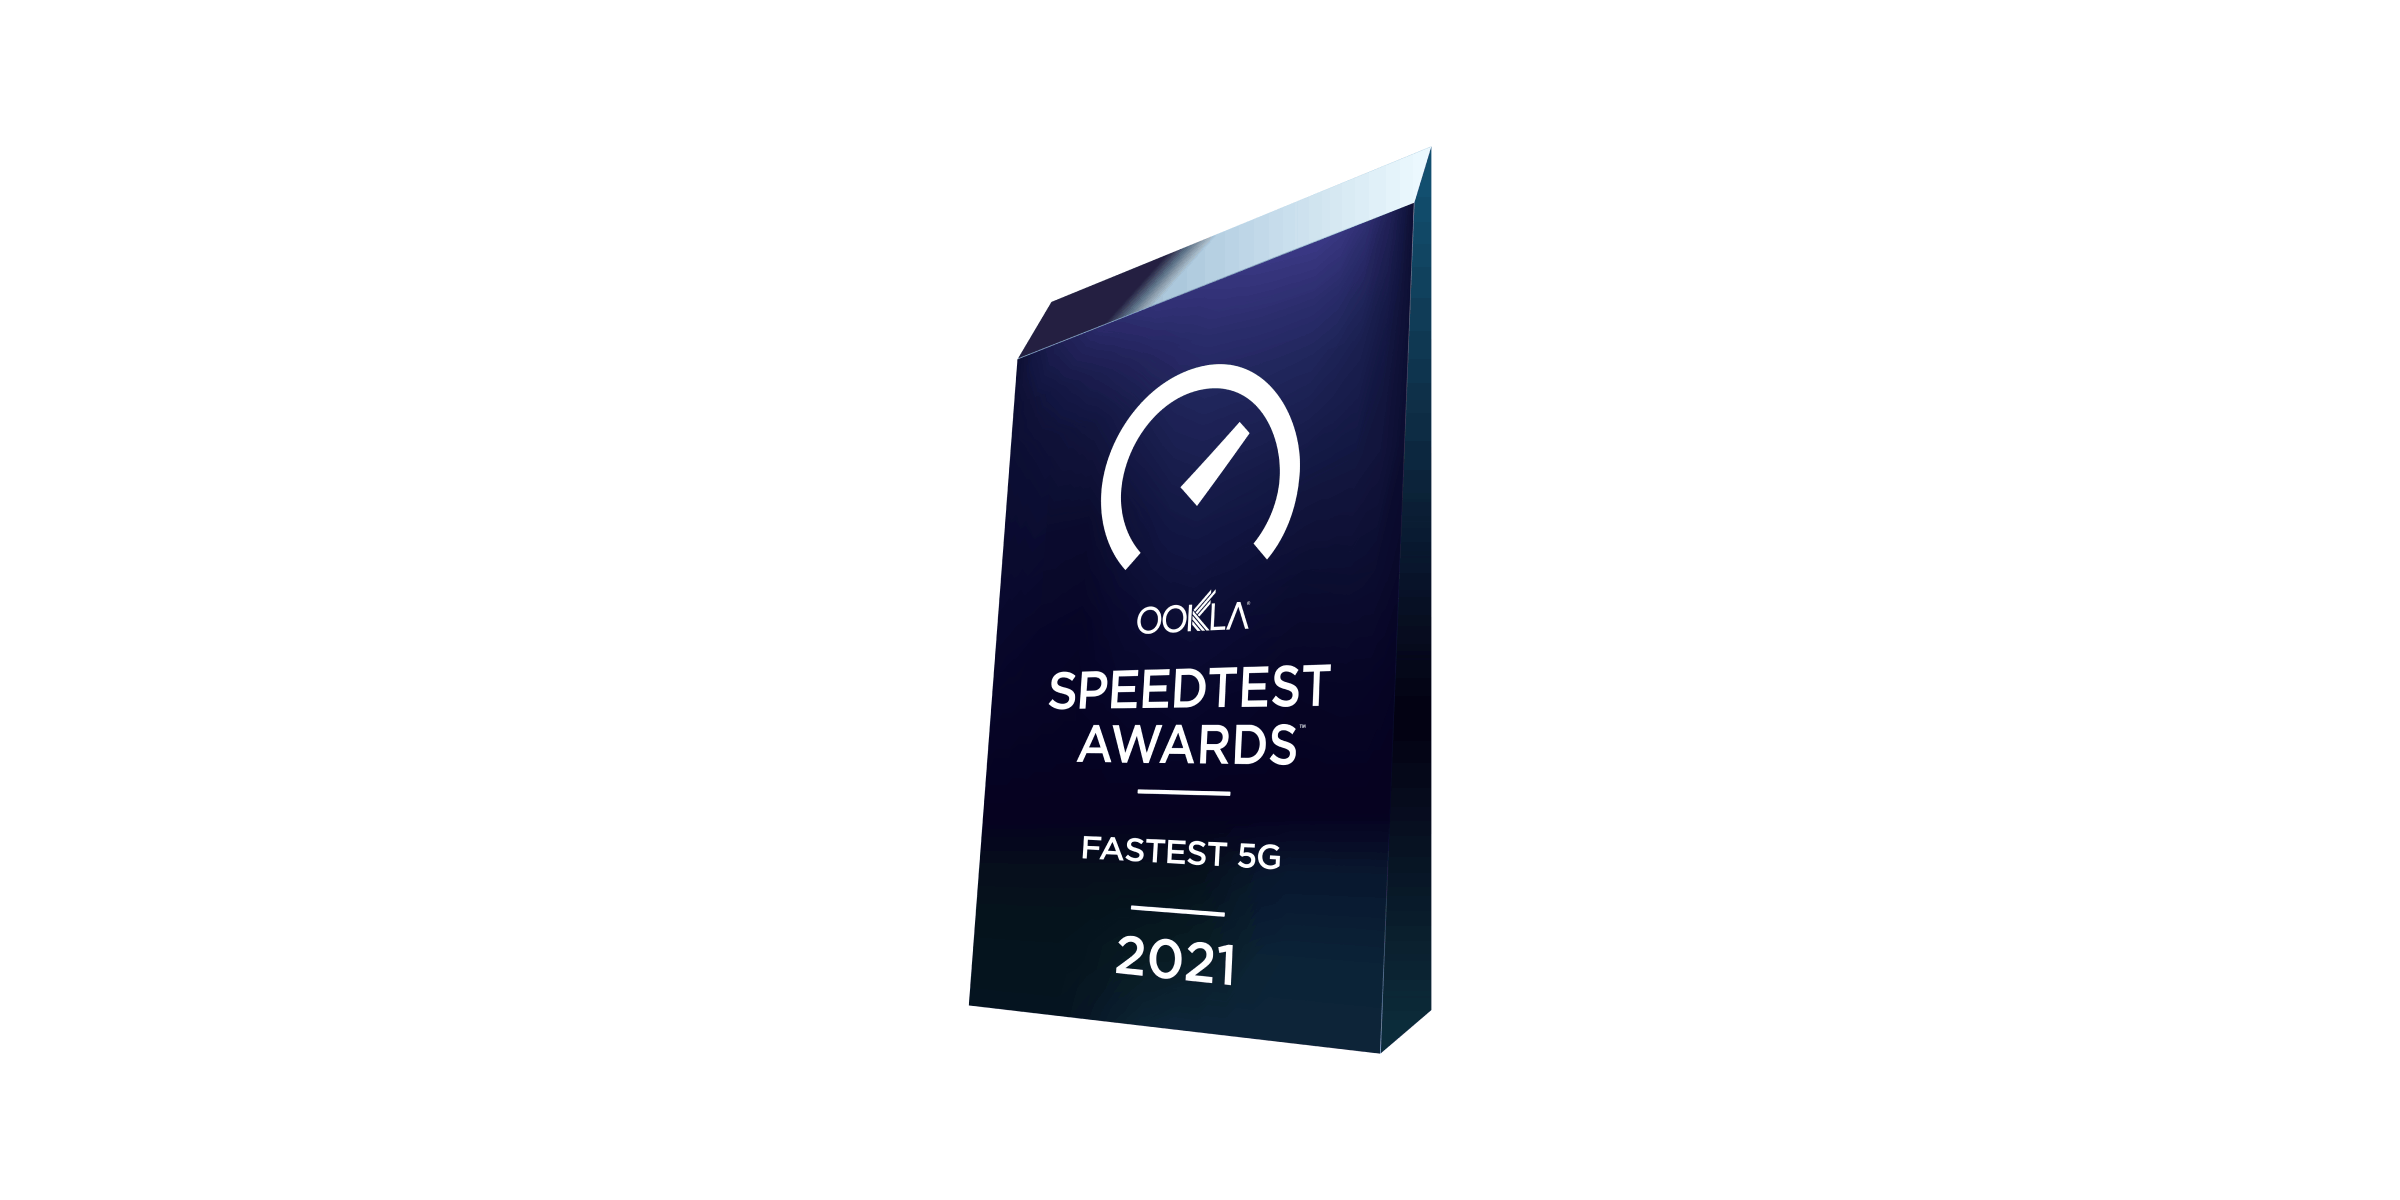 Ookla Speedtest awards fastest 5G 2021